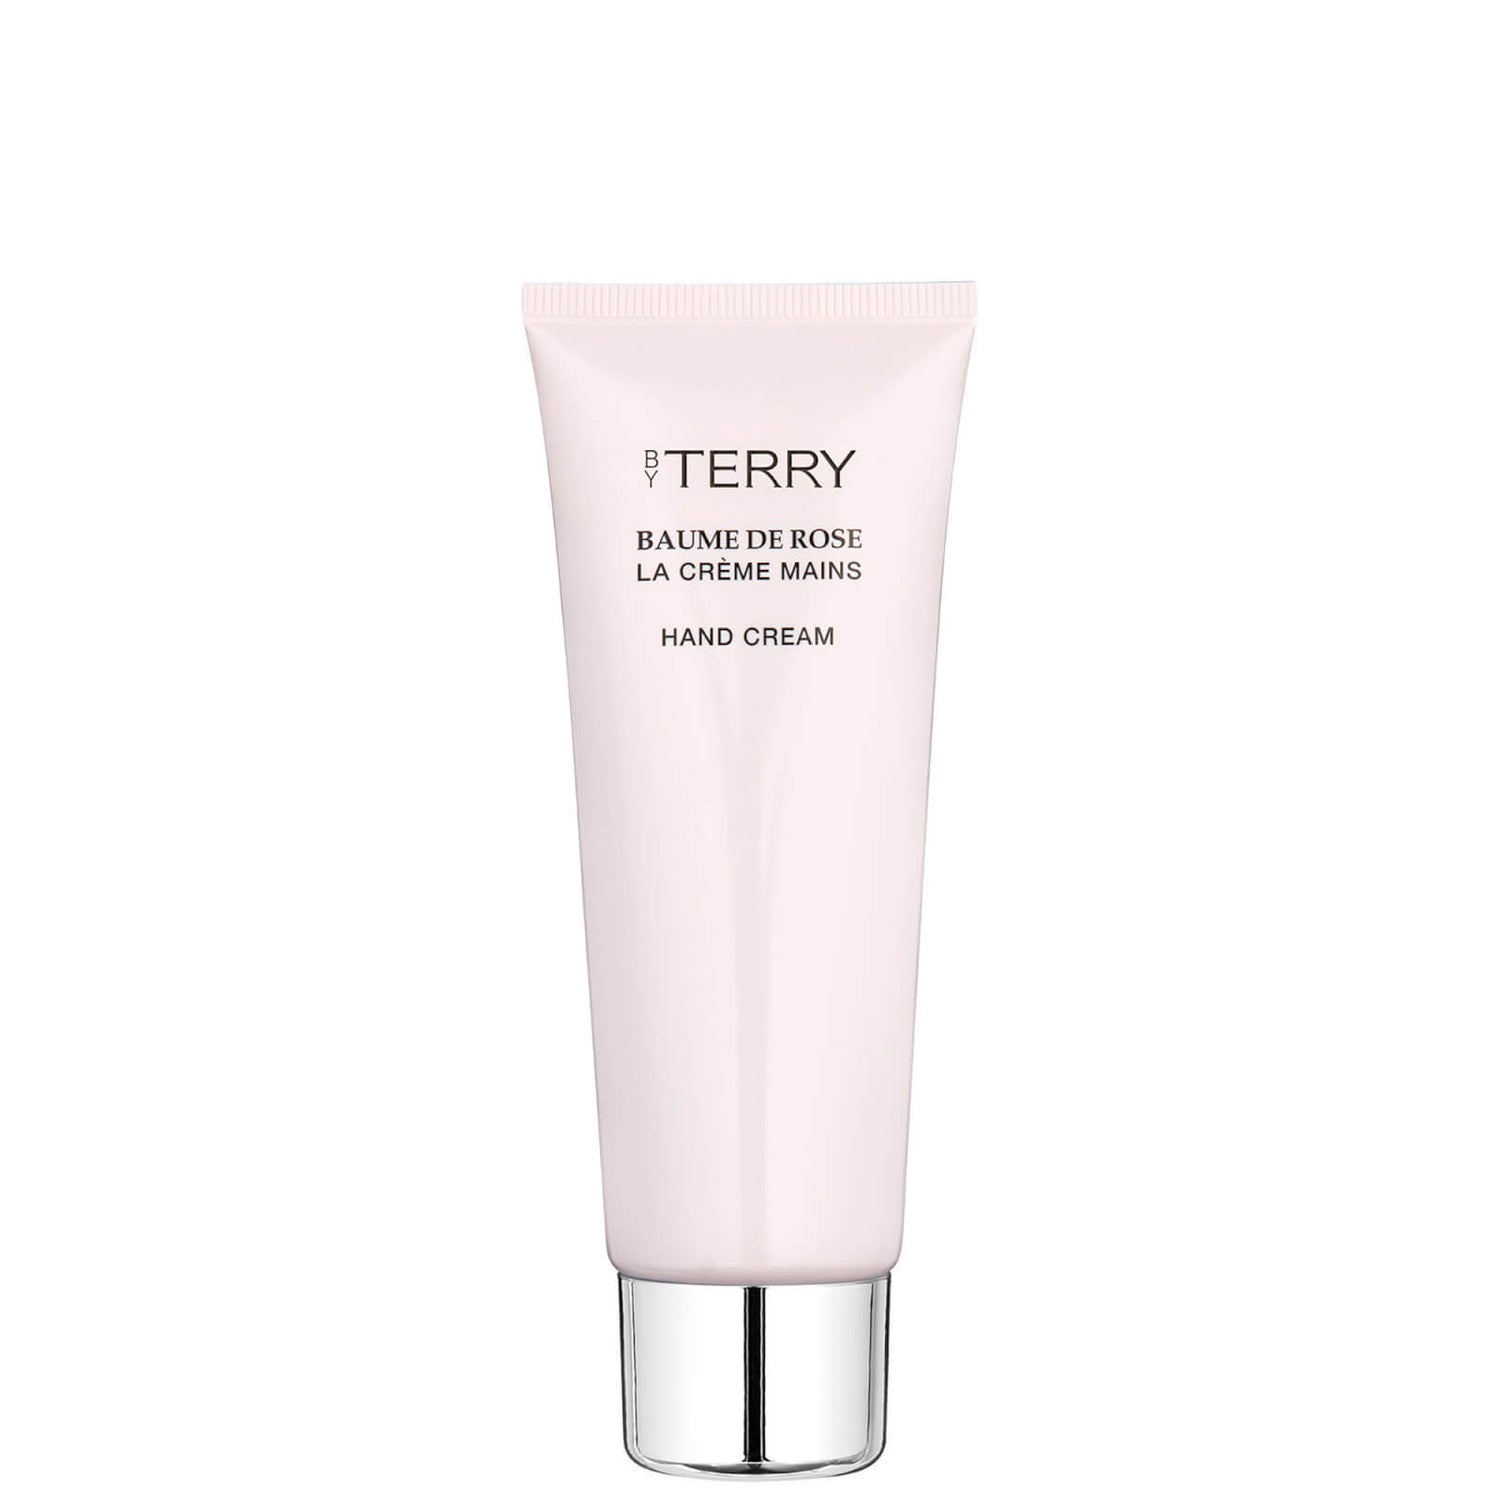 By Terry Baume de Rose La Creme Mains Hand Cream (By Terry ボーム ドゥ ローズ ラ クレーム マン ハンド クリーム) 75g